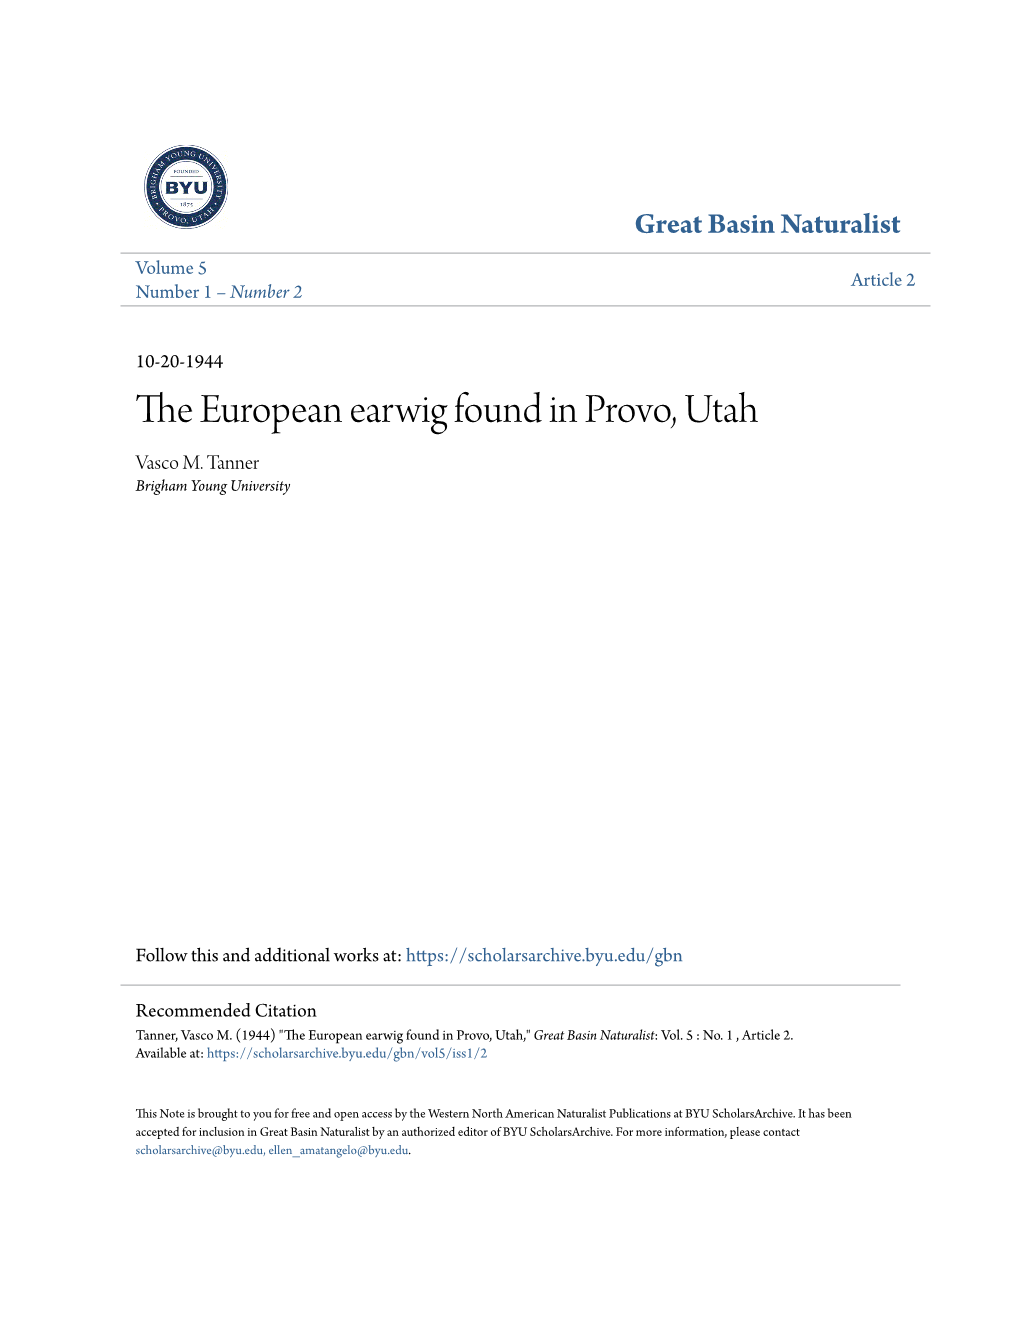 The European Earwig Found in Provo, Utah